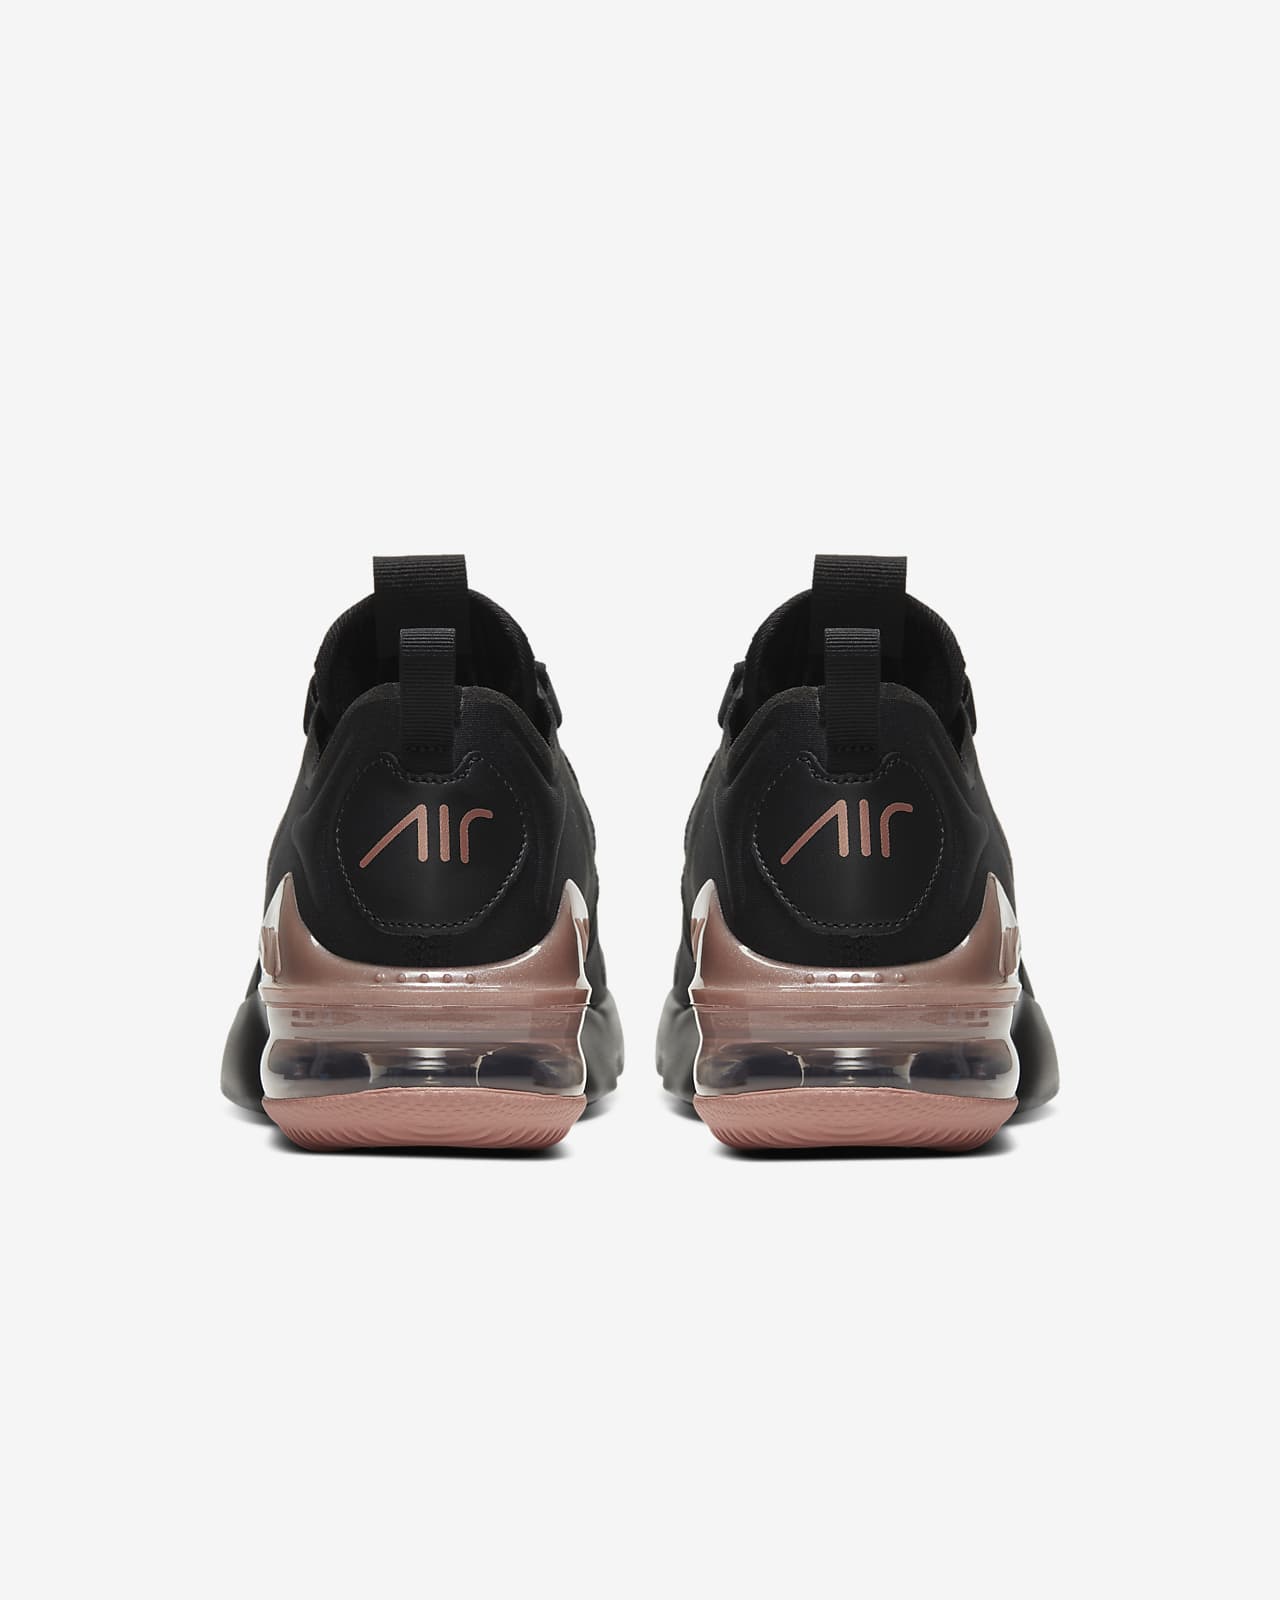 nike air womens shoes black